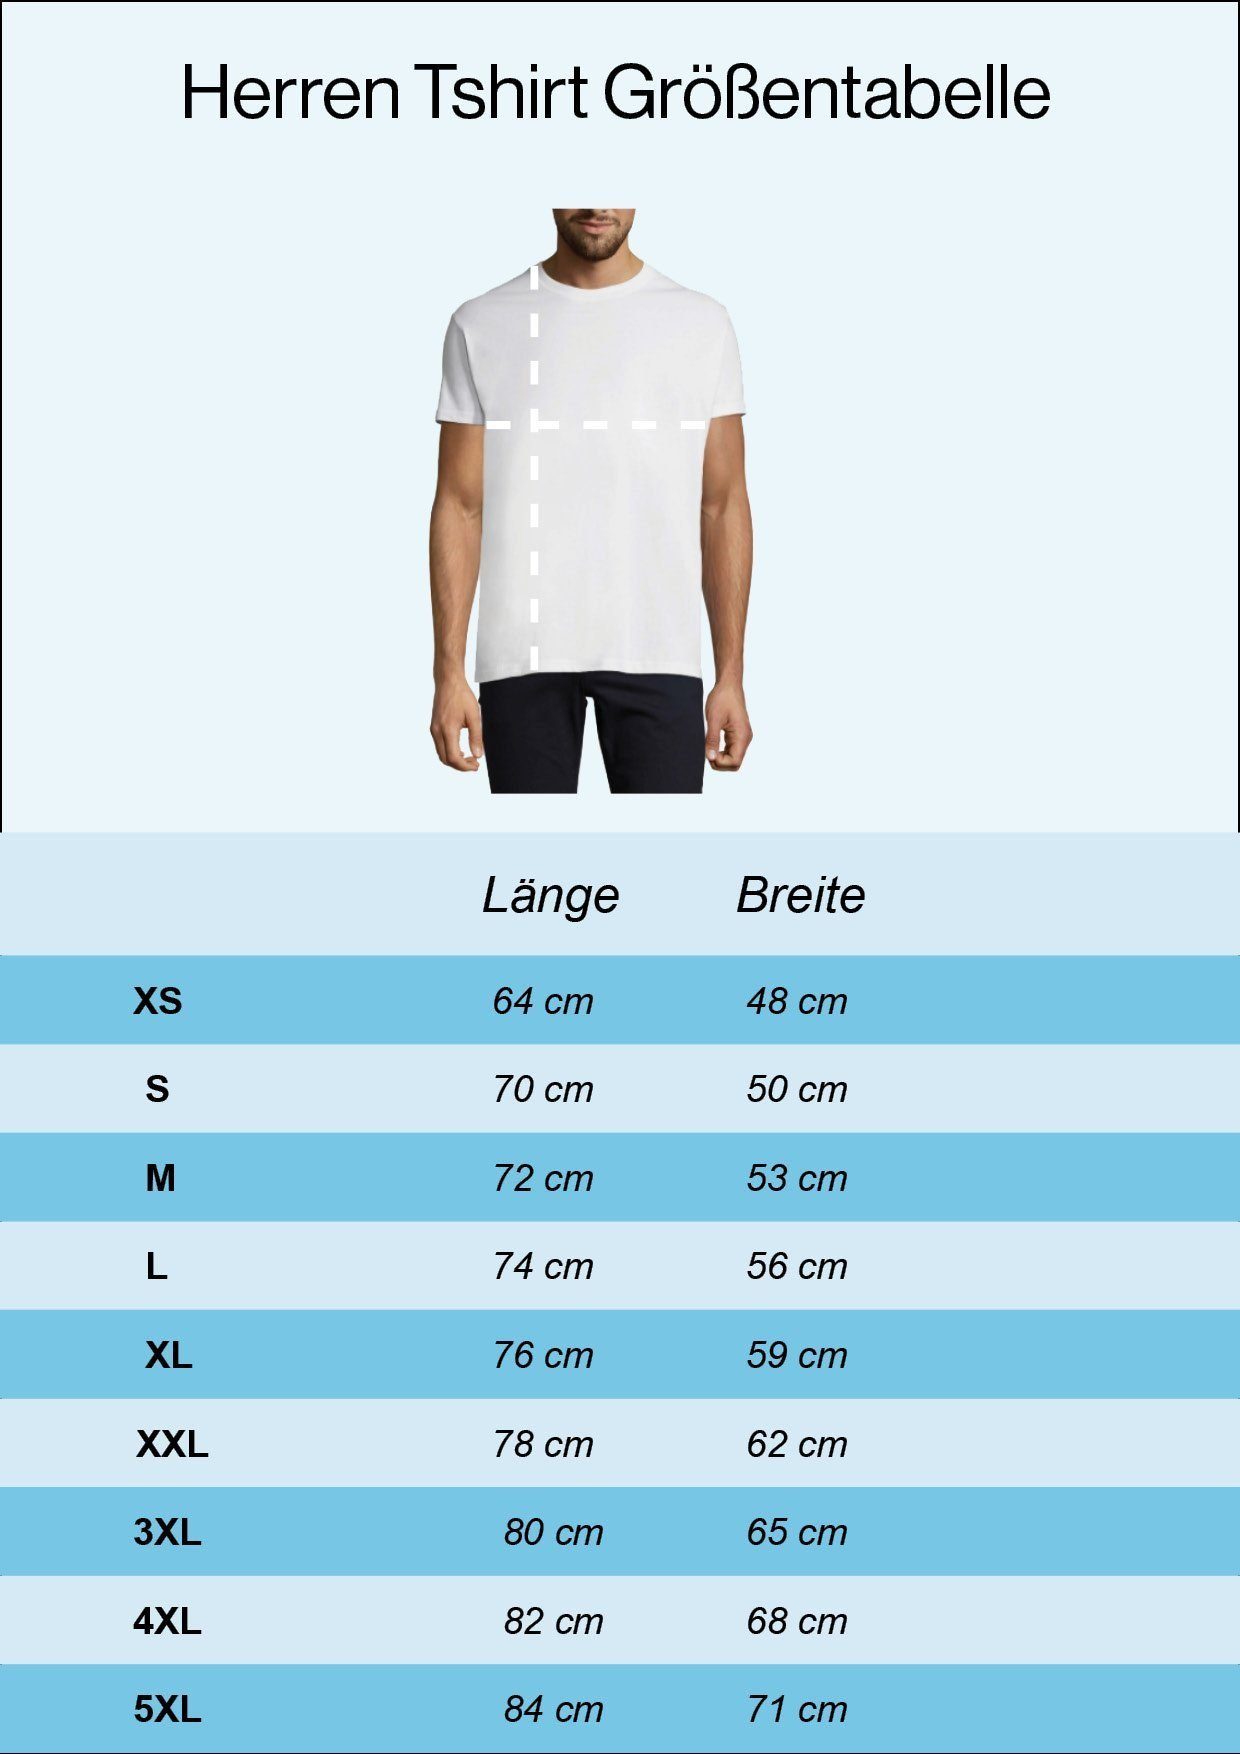 Designz mit Herren Frontprint XO Youth trendigem navyblau T-shirt T-Shirt